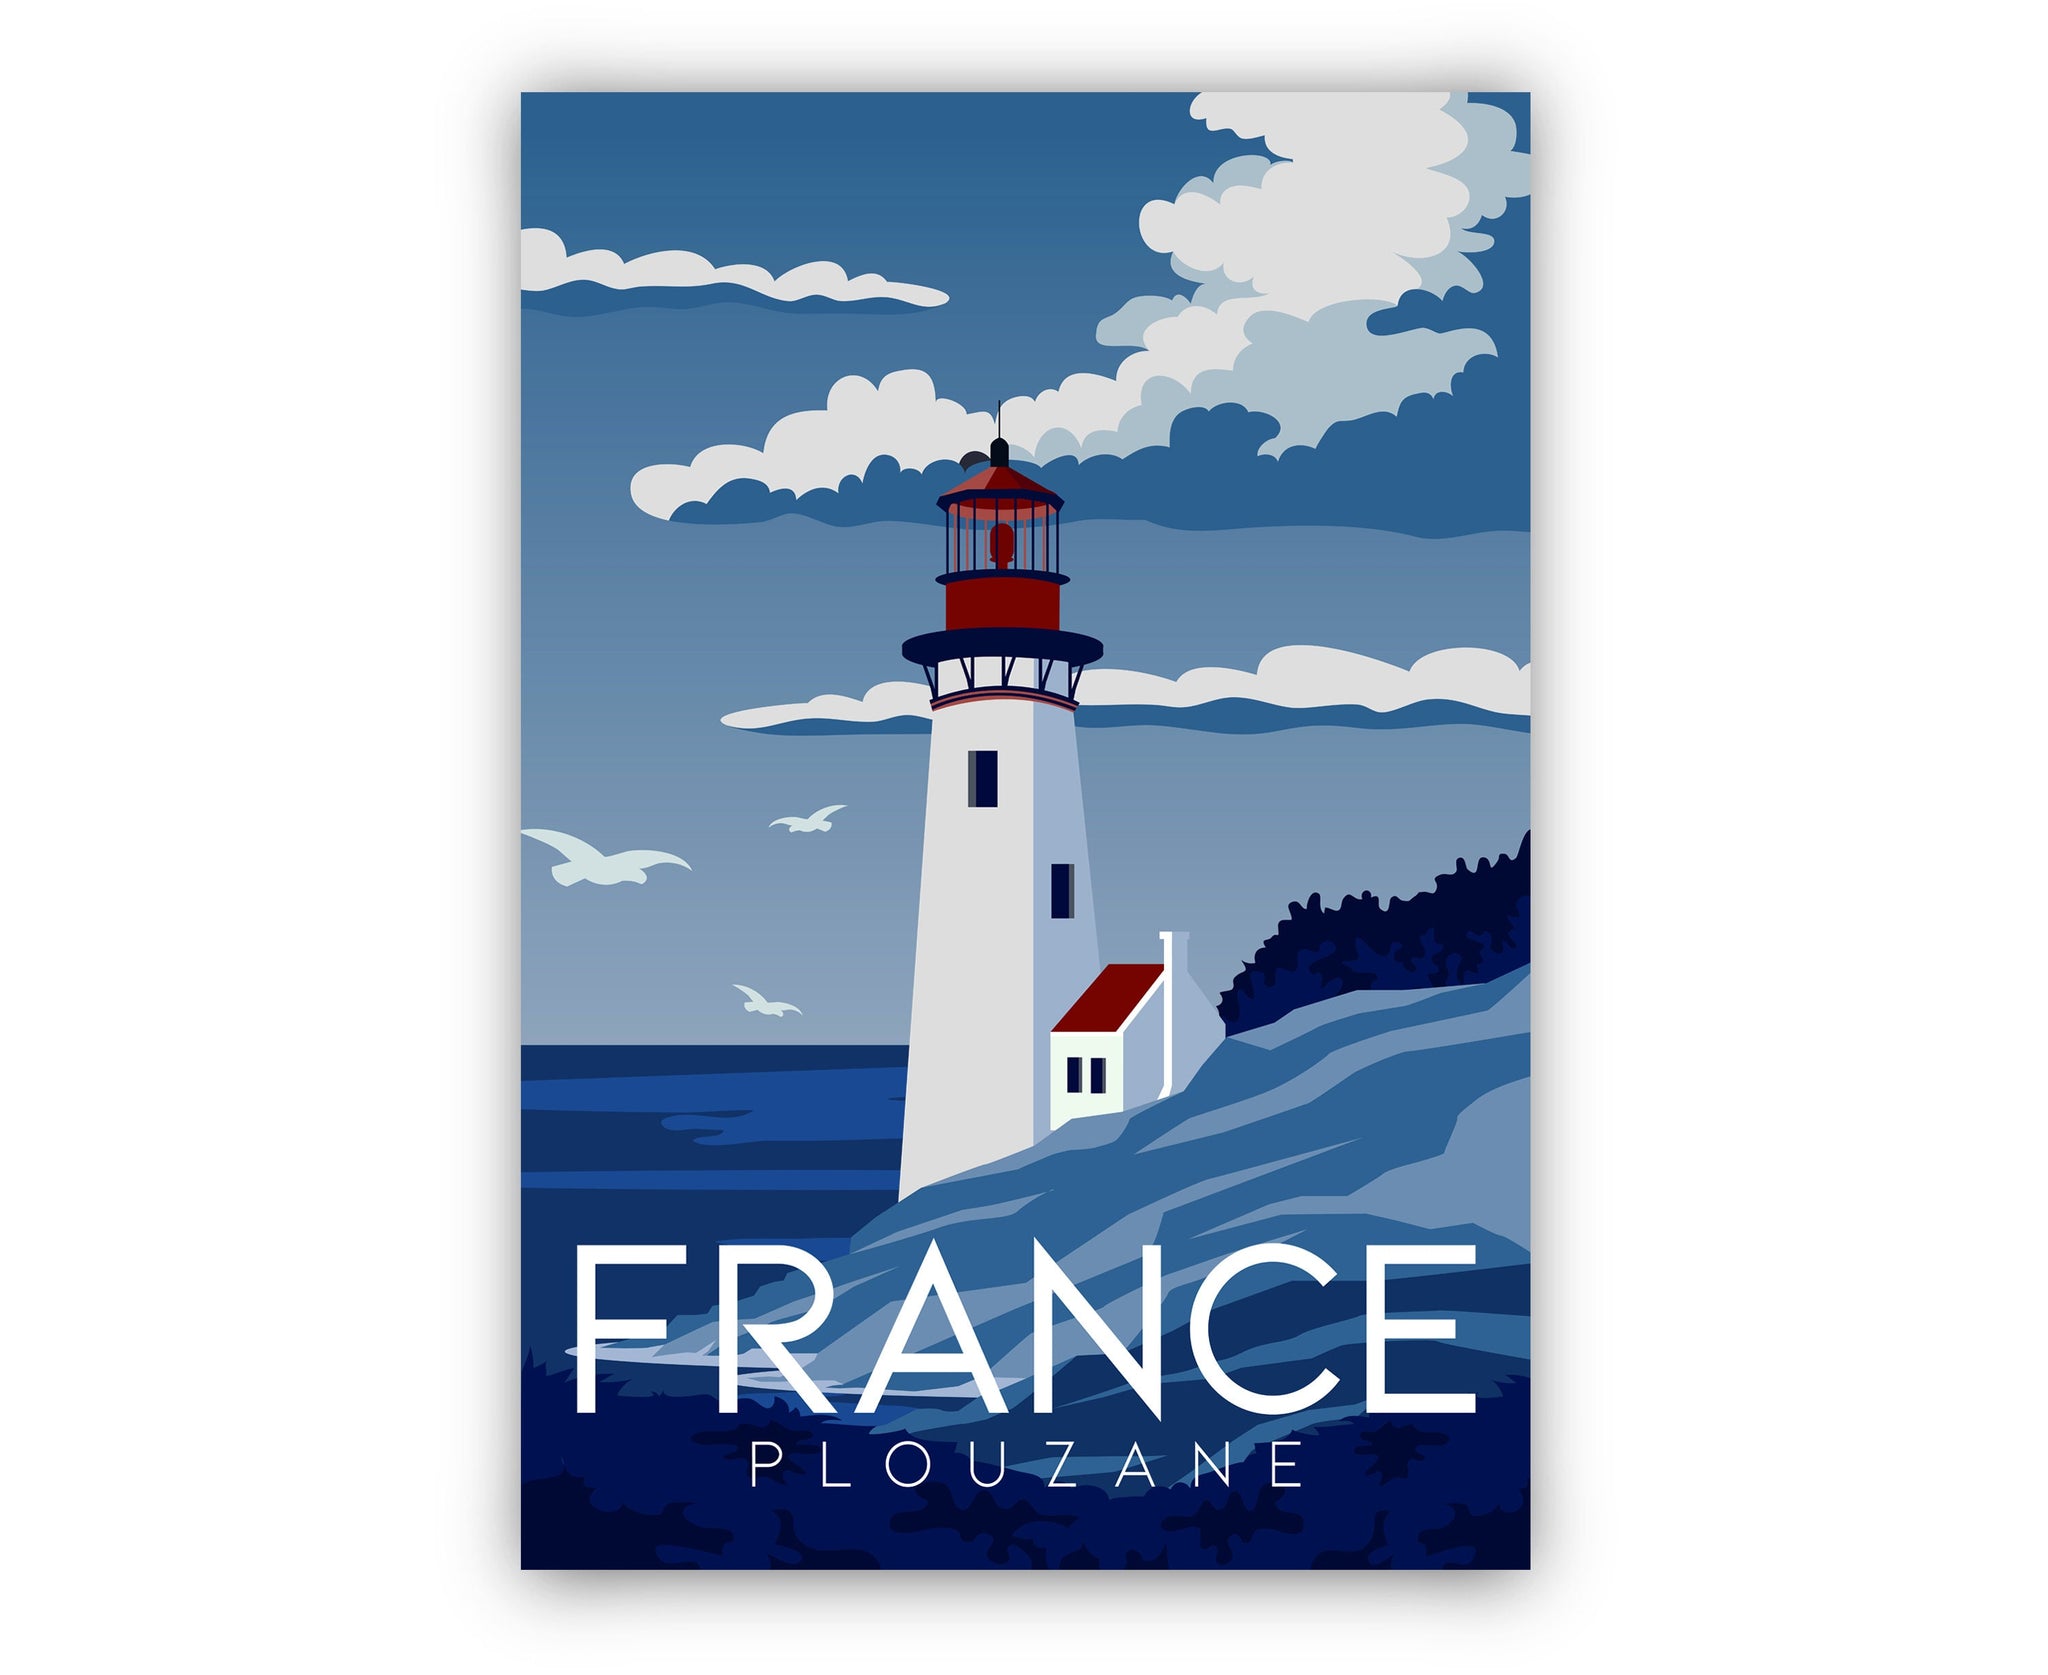 FRANCE PLOUZANE travel poster, Plouzane cityscape poster print, France landmark poster wall art, Home wall art, Office wall decoration